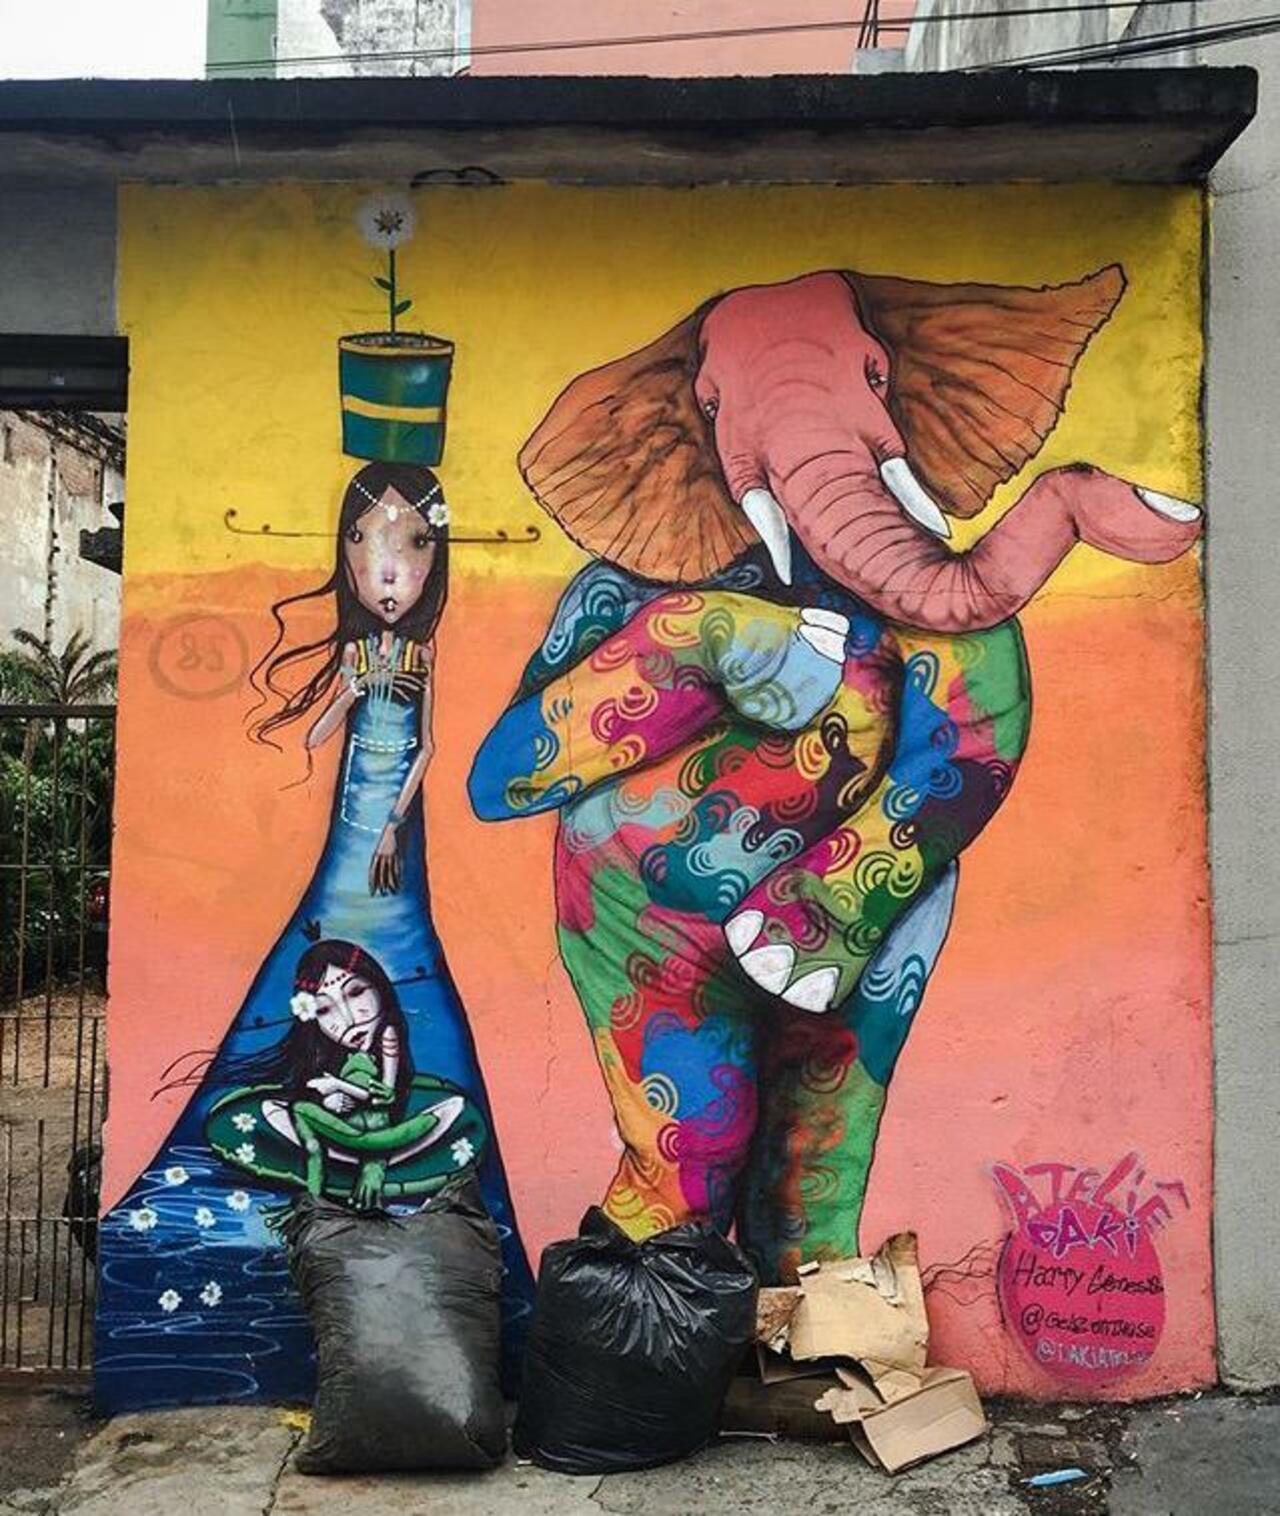 Street Art by Harry Geneis & Gelson in São Paulo 

#art #mural #graffiti #streetart http://t.co/rg8NxqjzUN